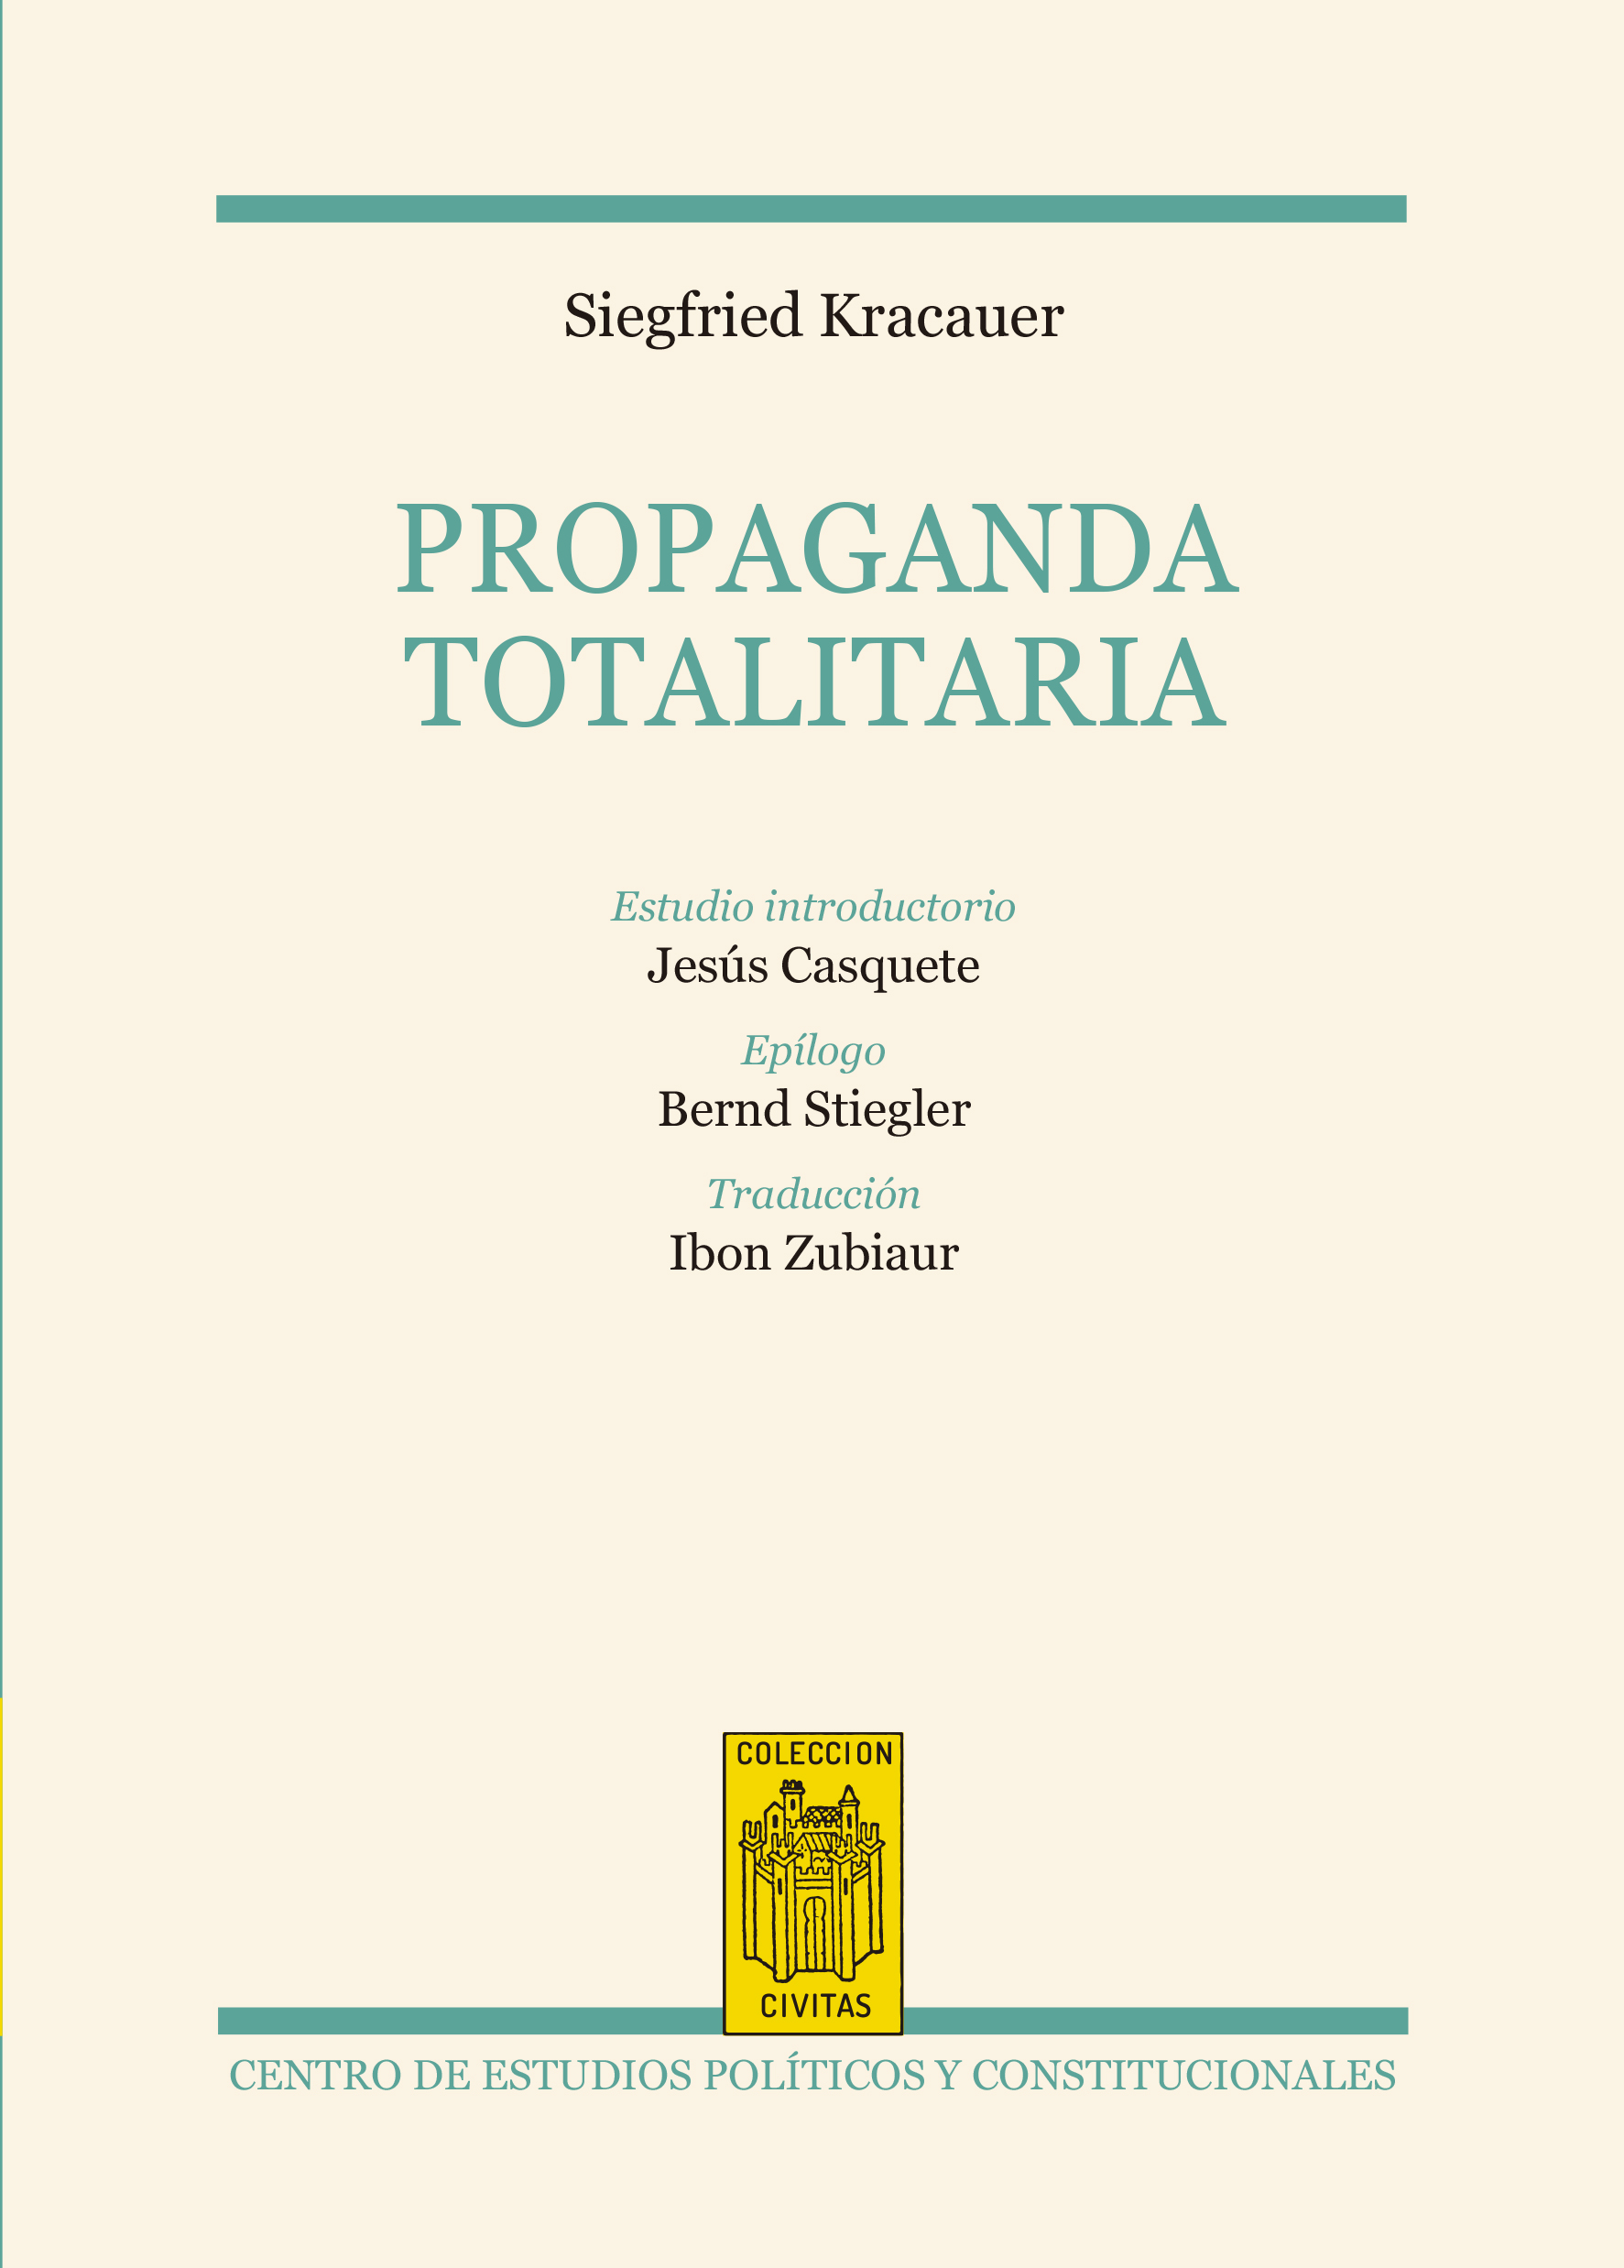 Siegfried Kracauer y la propaganda nazi